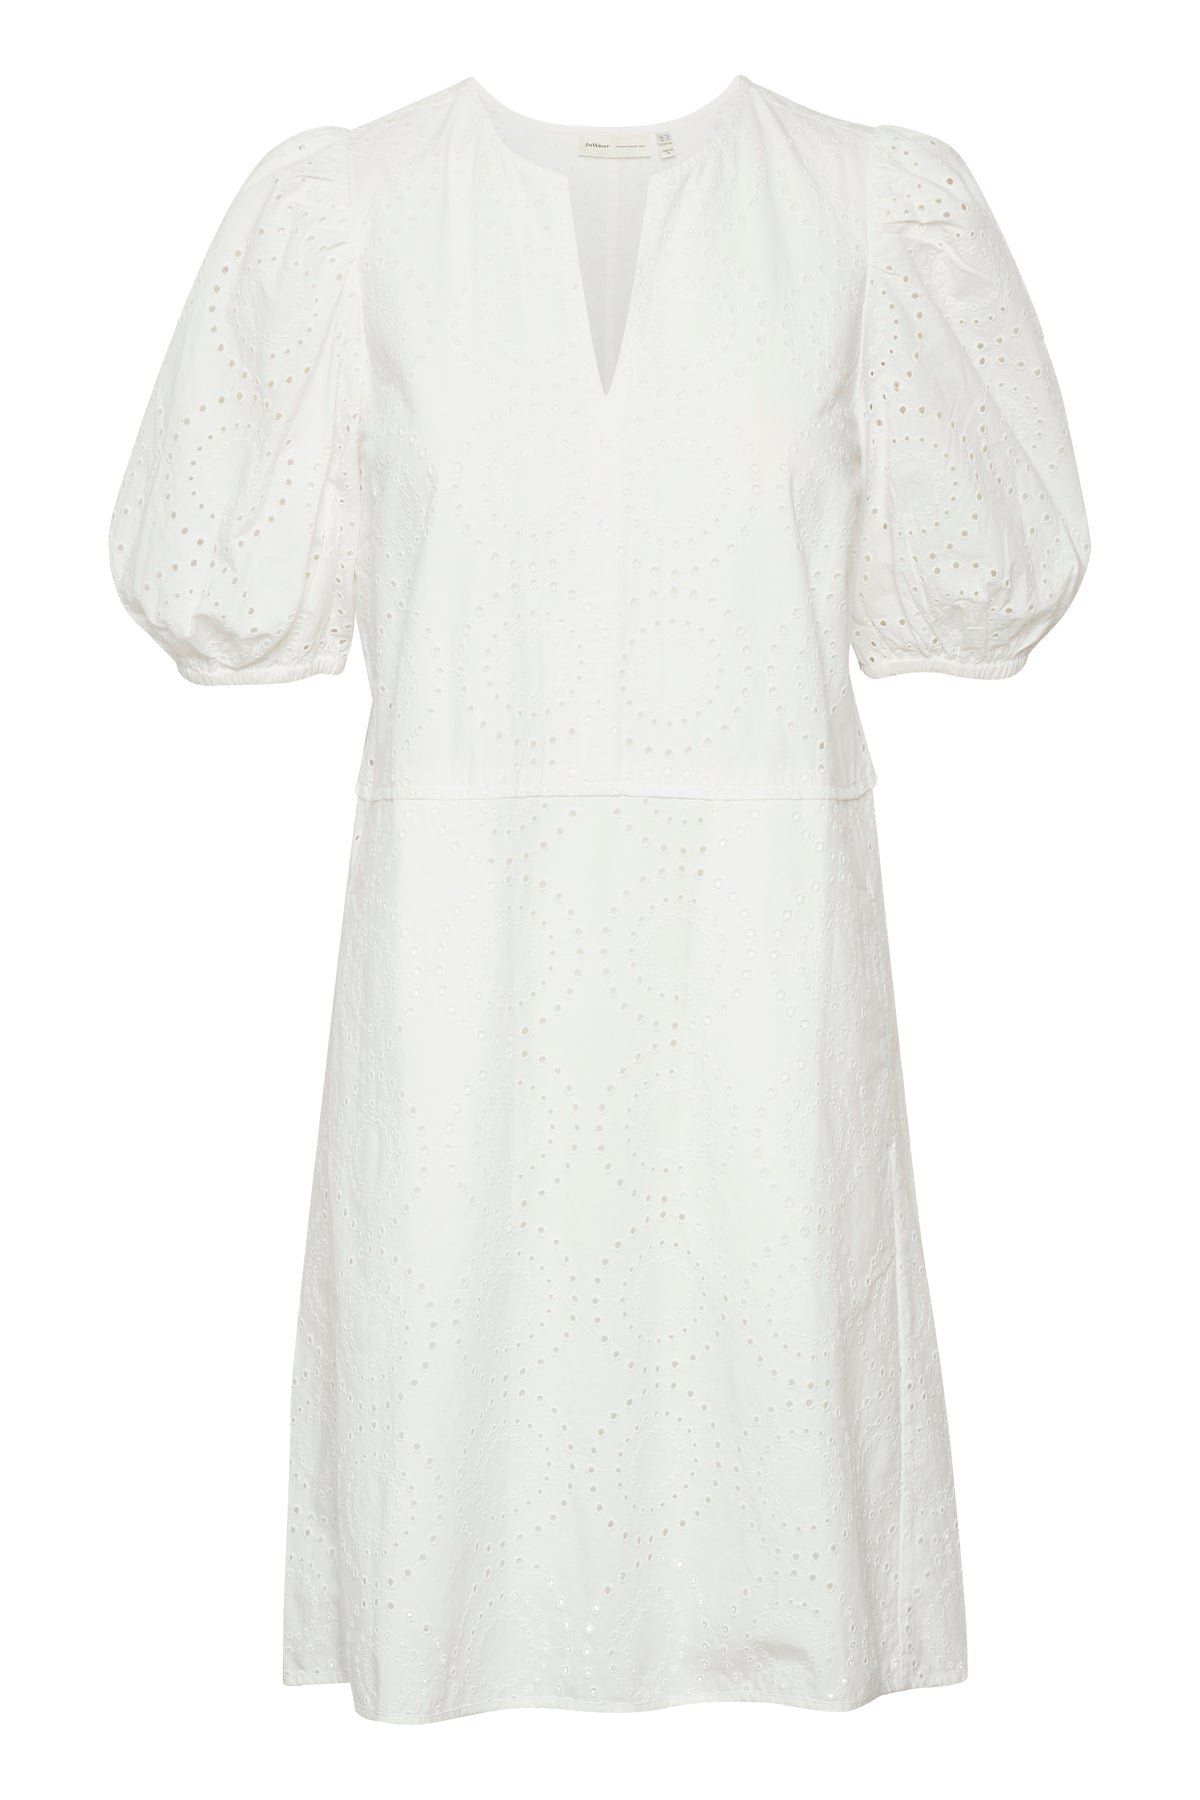 HarleneIW Dress - Pure White